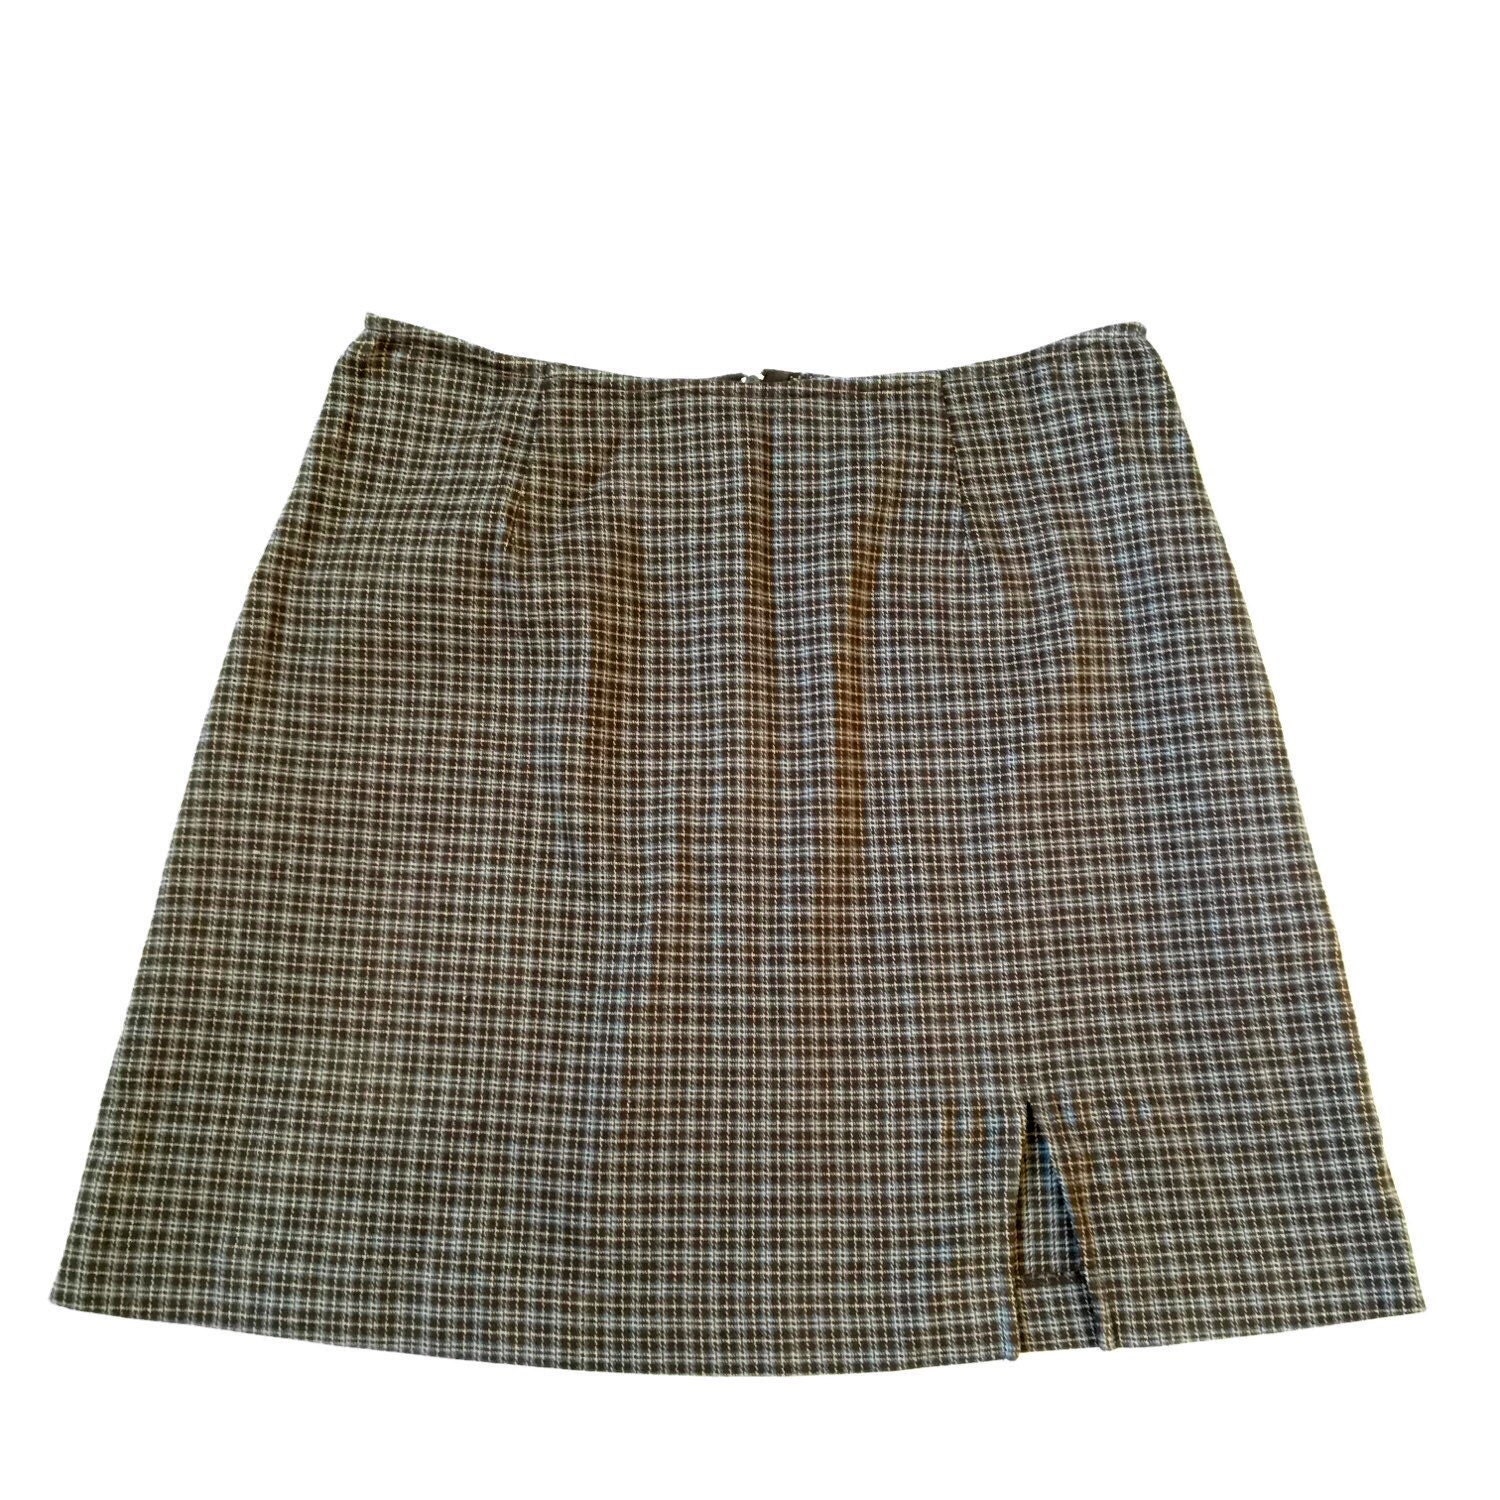 90s Grunge Plaid Mini Skirt